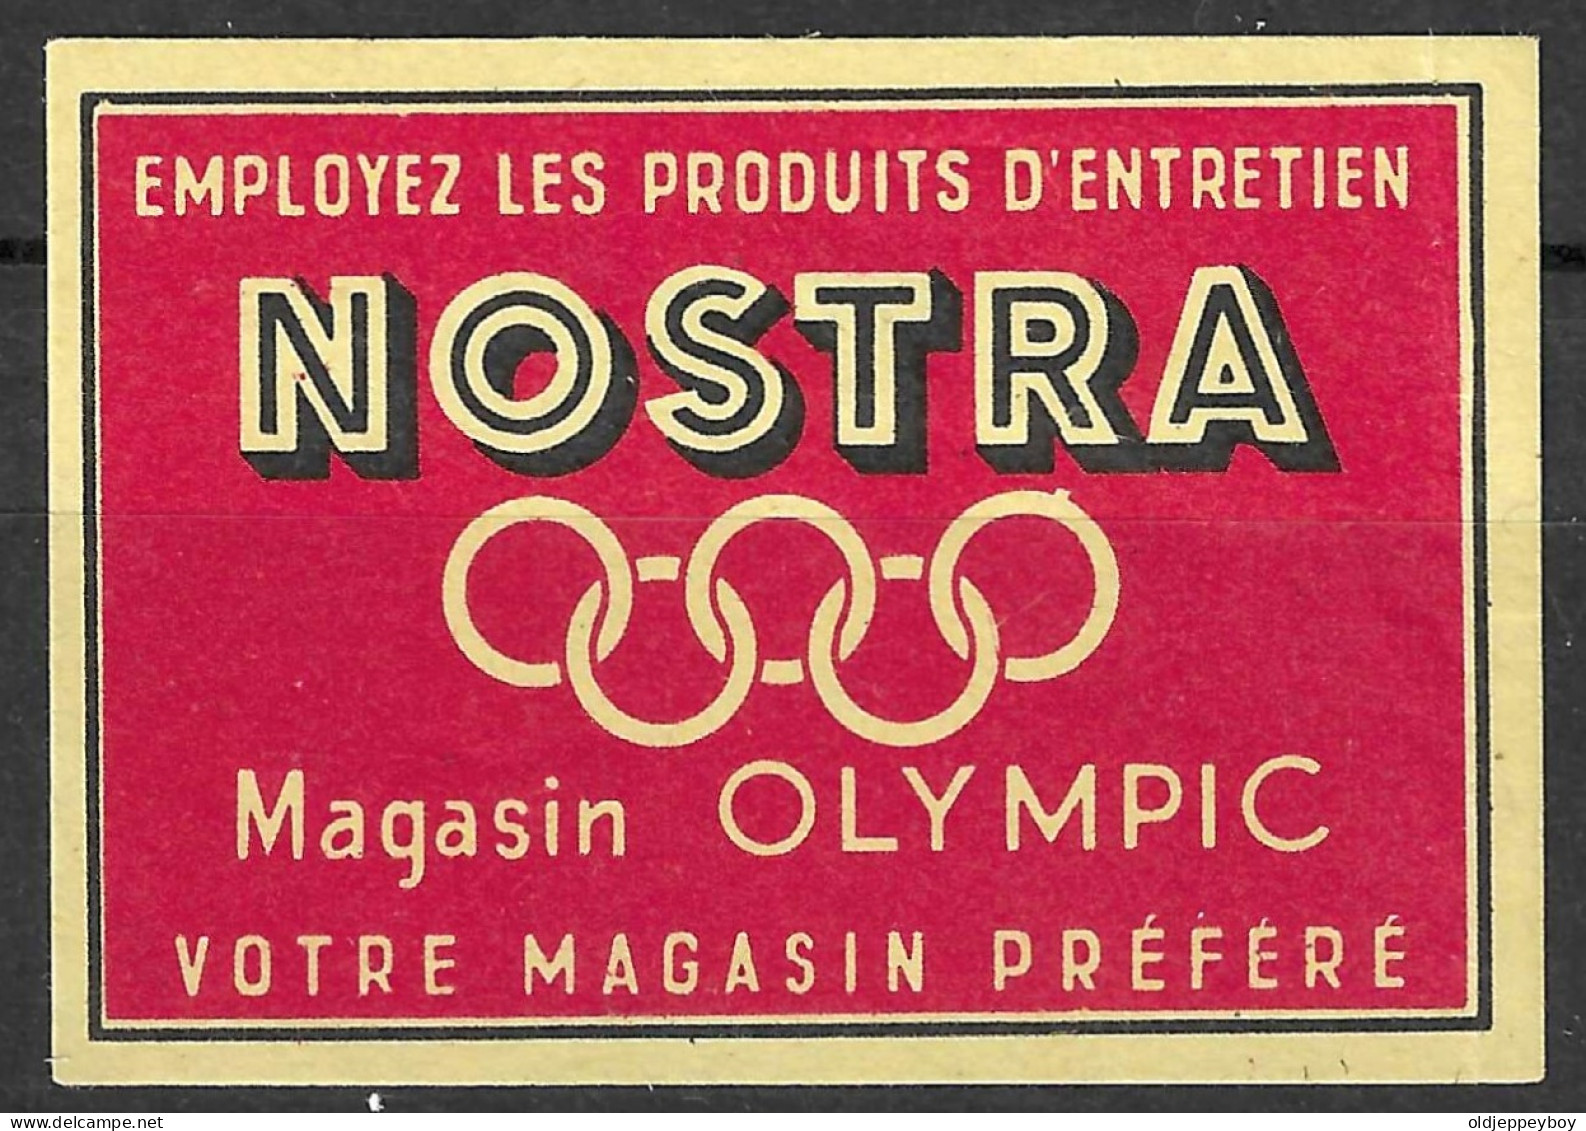  VINTAGE MATCHBOX LABEL BELGIUM 1920 Games In Antwerp  NOSTRA MAGASIN OLYMPIC VOTRE MAGASIN PREFERE   5  X 3.5  Cm  - Matchbox Labels